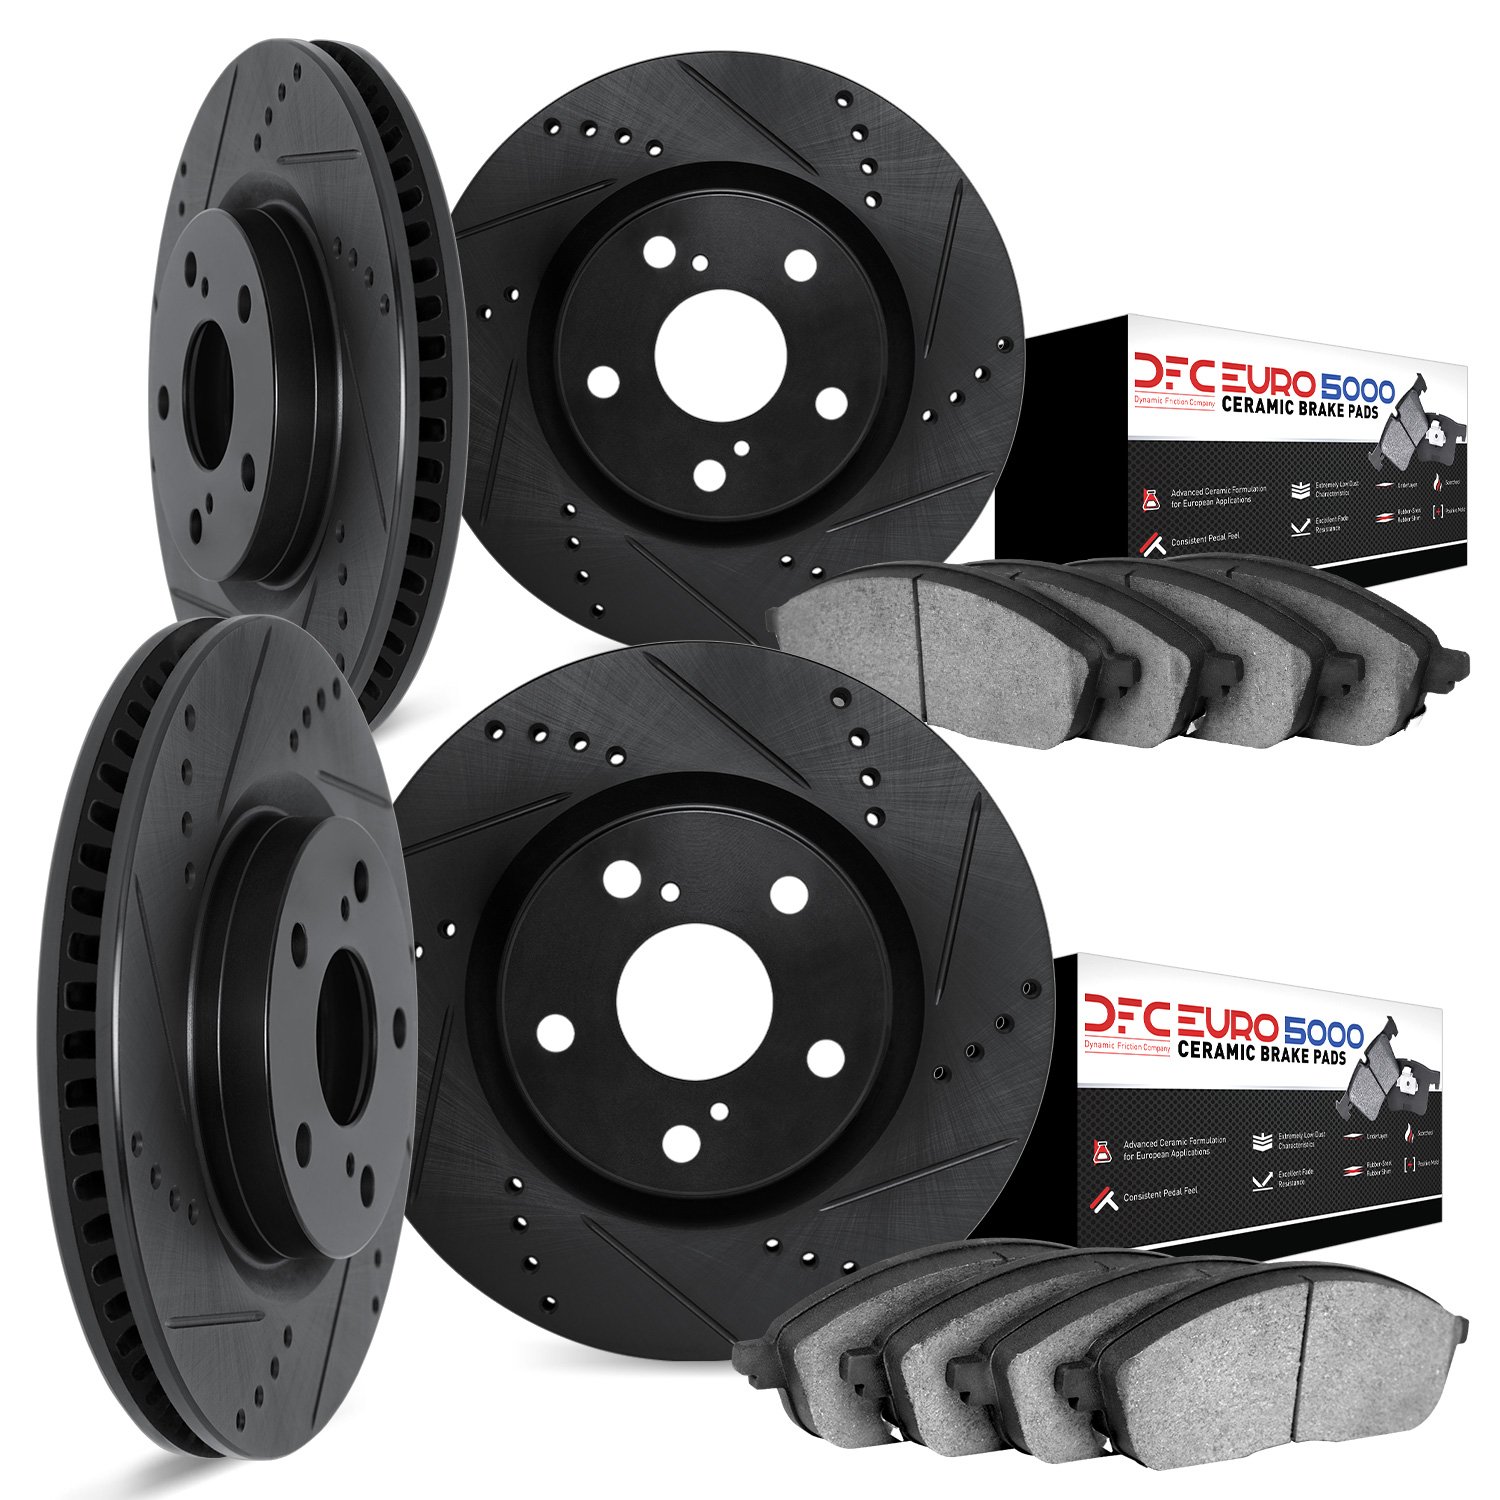 8604-54005 Drilled/Slotted Brake Rotors w/5000 Euro Ceramic Brake Pads Kit [Black], 2011-2014 Ford/Lincoln/Mercury/Mazda, Positi